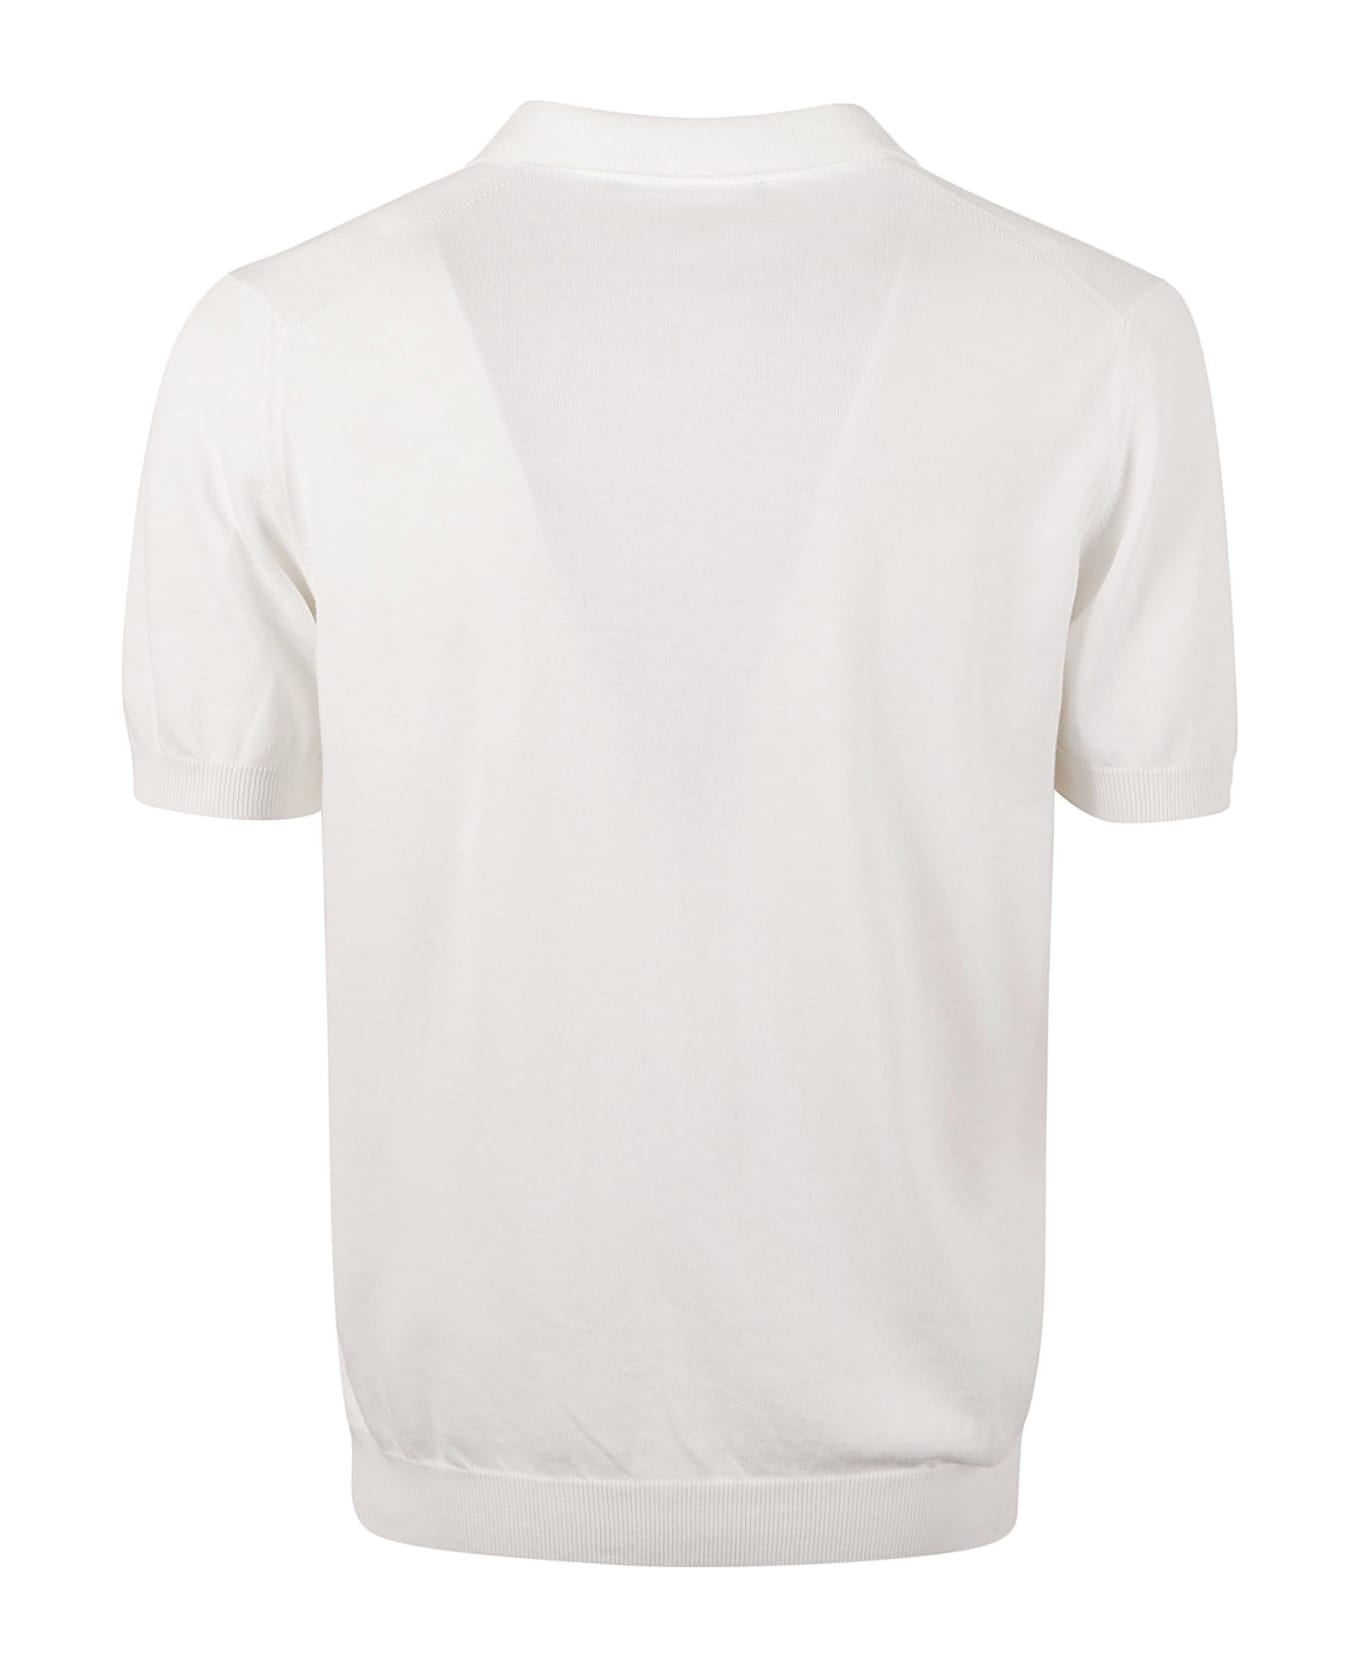 Tagliatore Button-less Placket Polo Shirt - Bianco シャツ